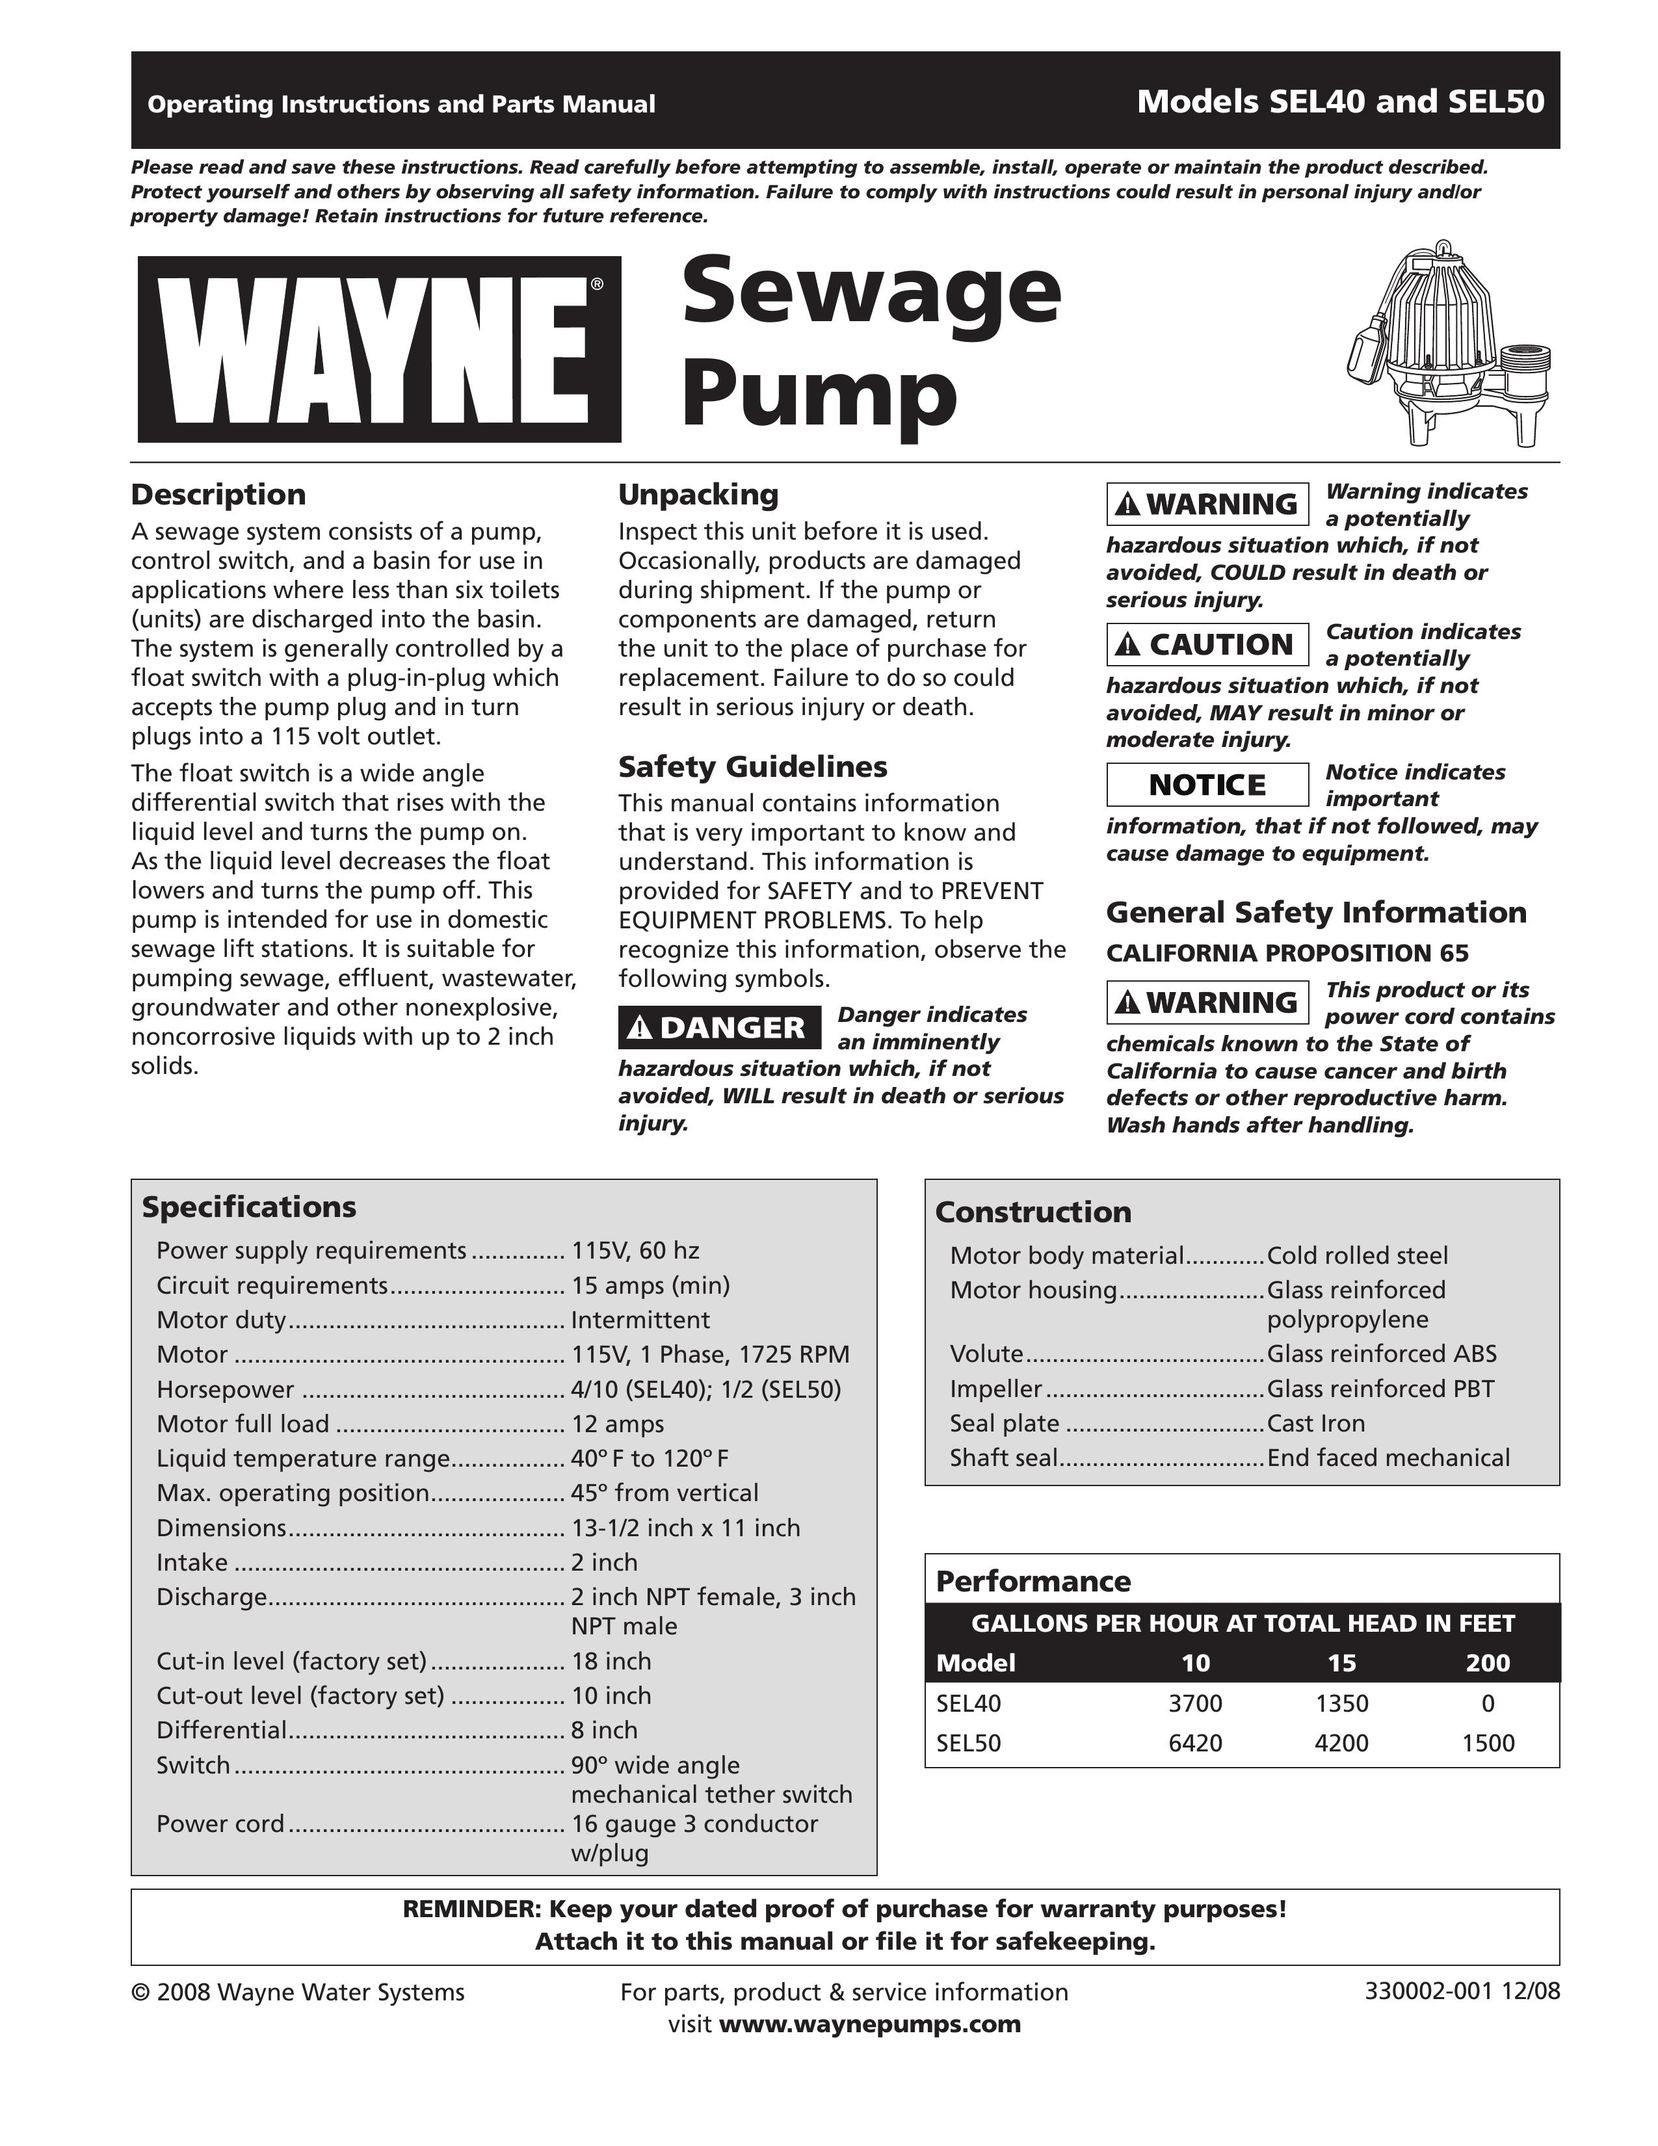 Wayne 330002-001 Septic System User Manual